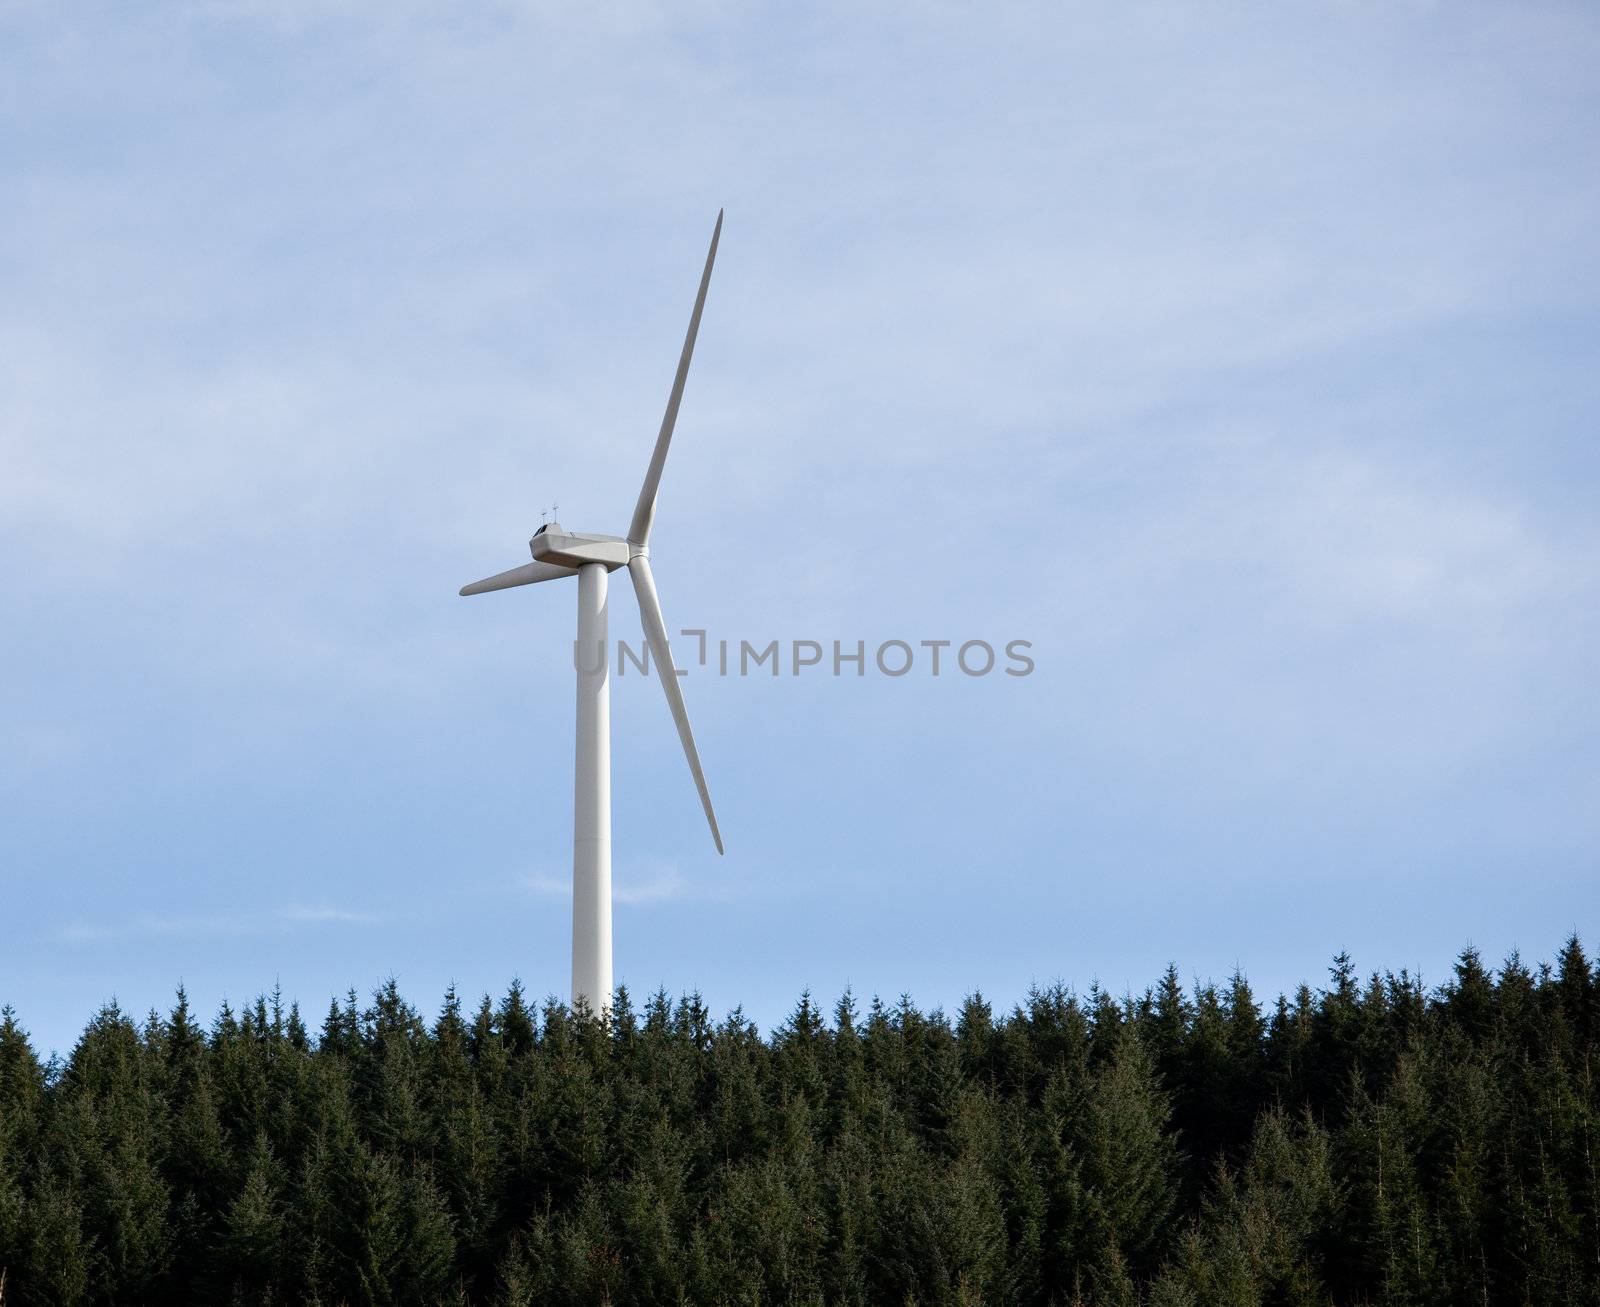 Single wind electricity generator by steheap